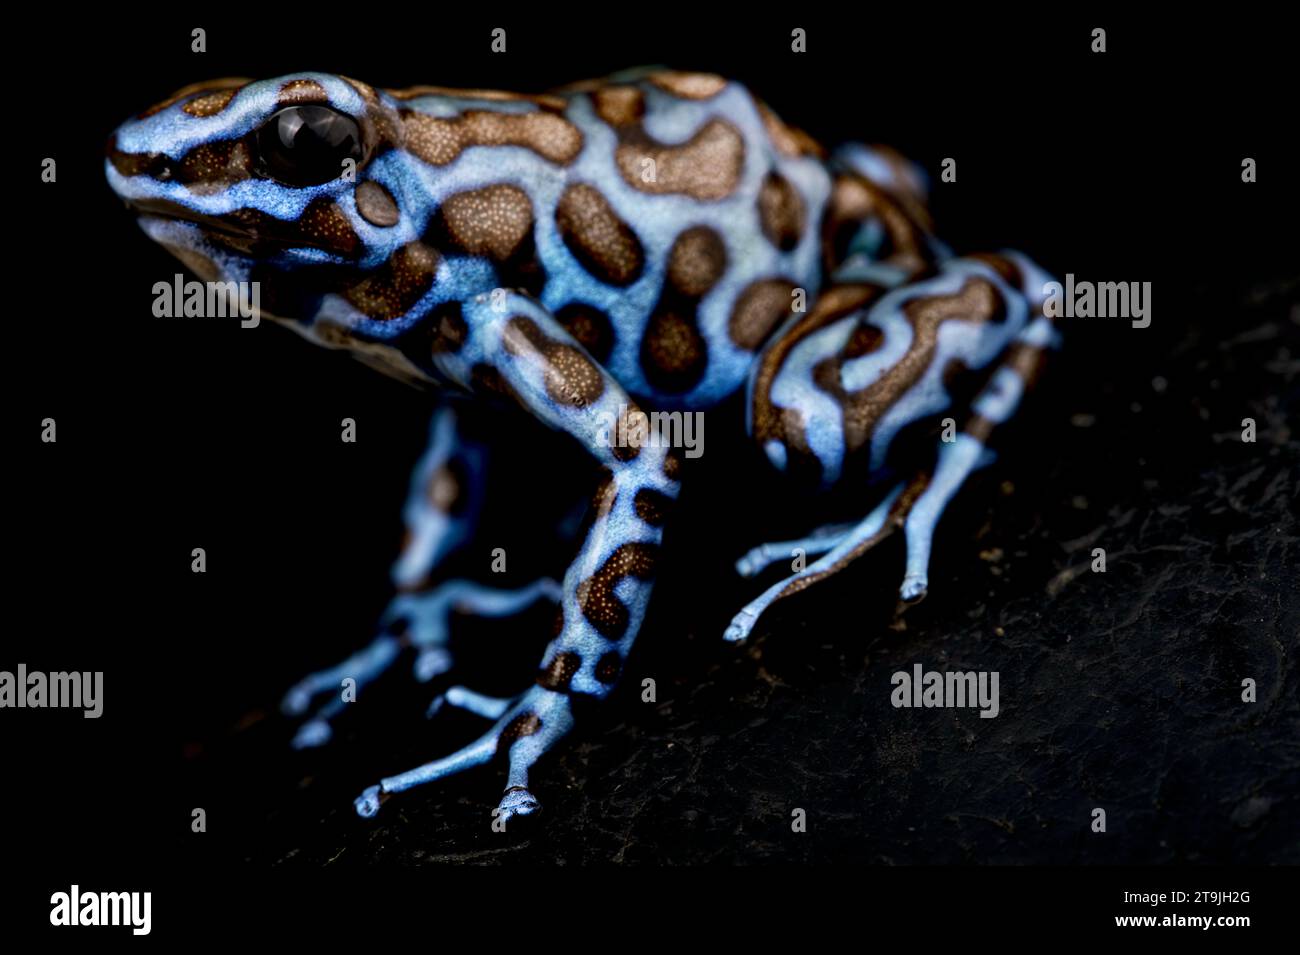 The Blue and Black poison frog (Dendrobates auratus) Stock Photo